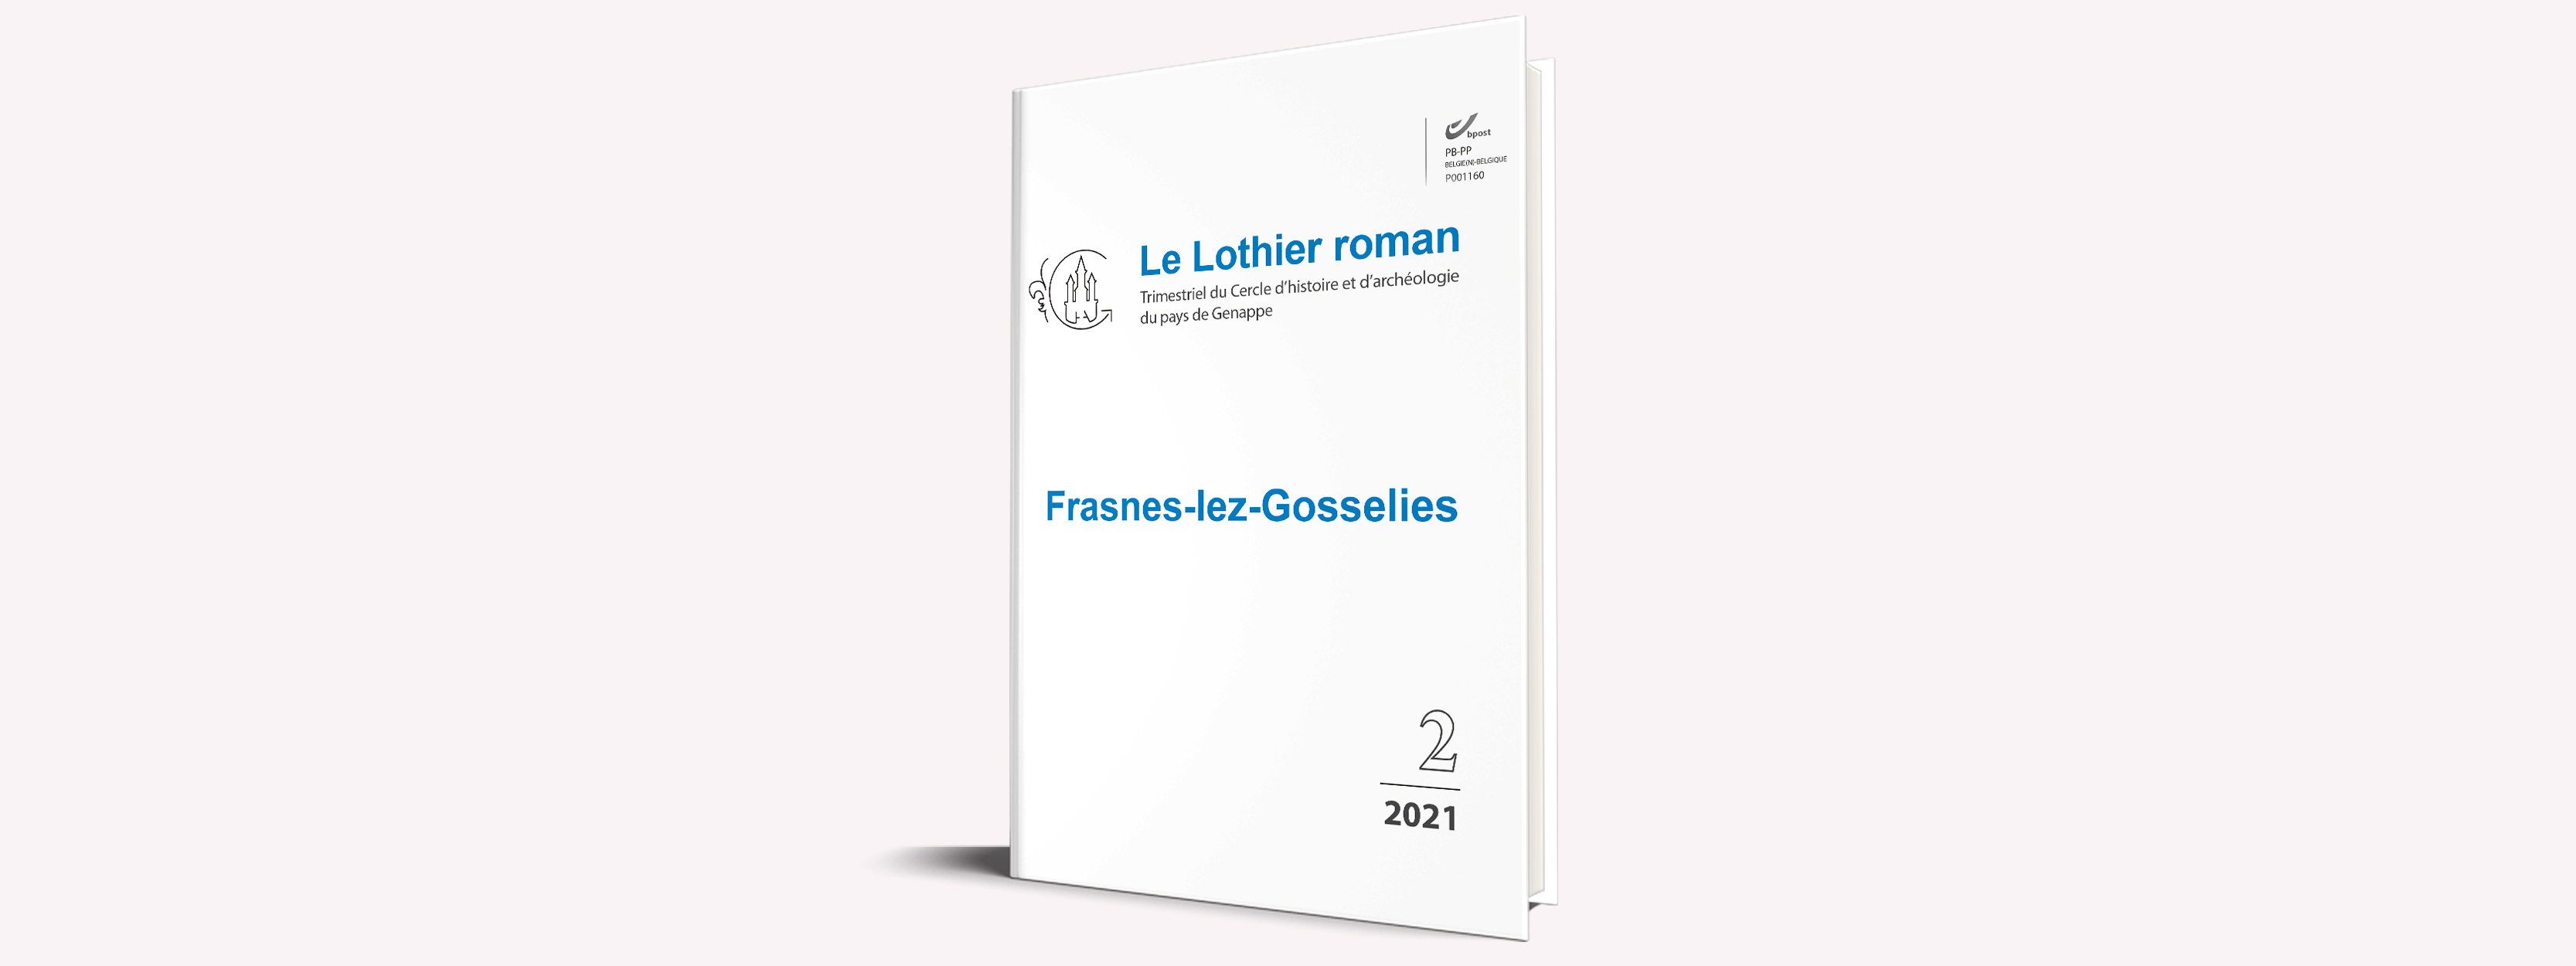 Lothier Roman - 02/2021 - Frasnes-lez-Gosselies